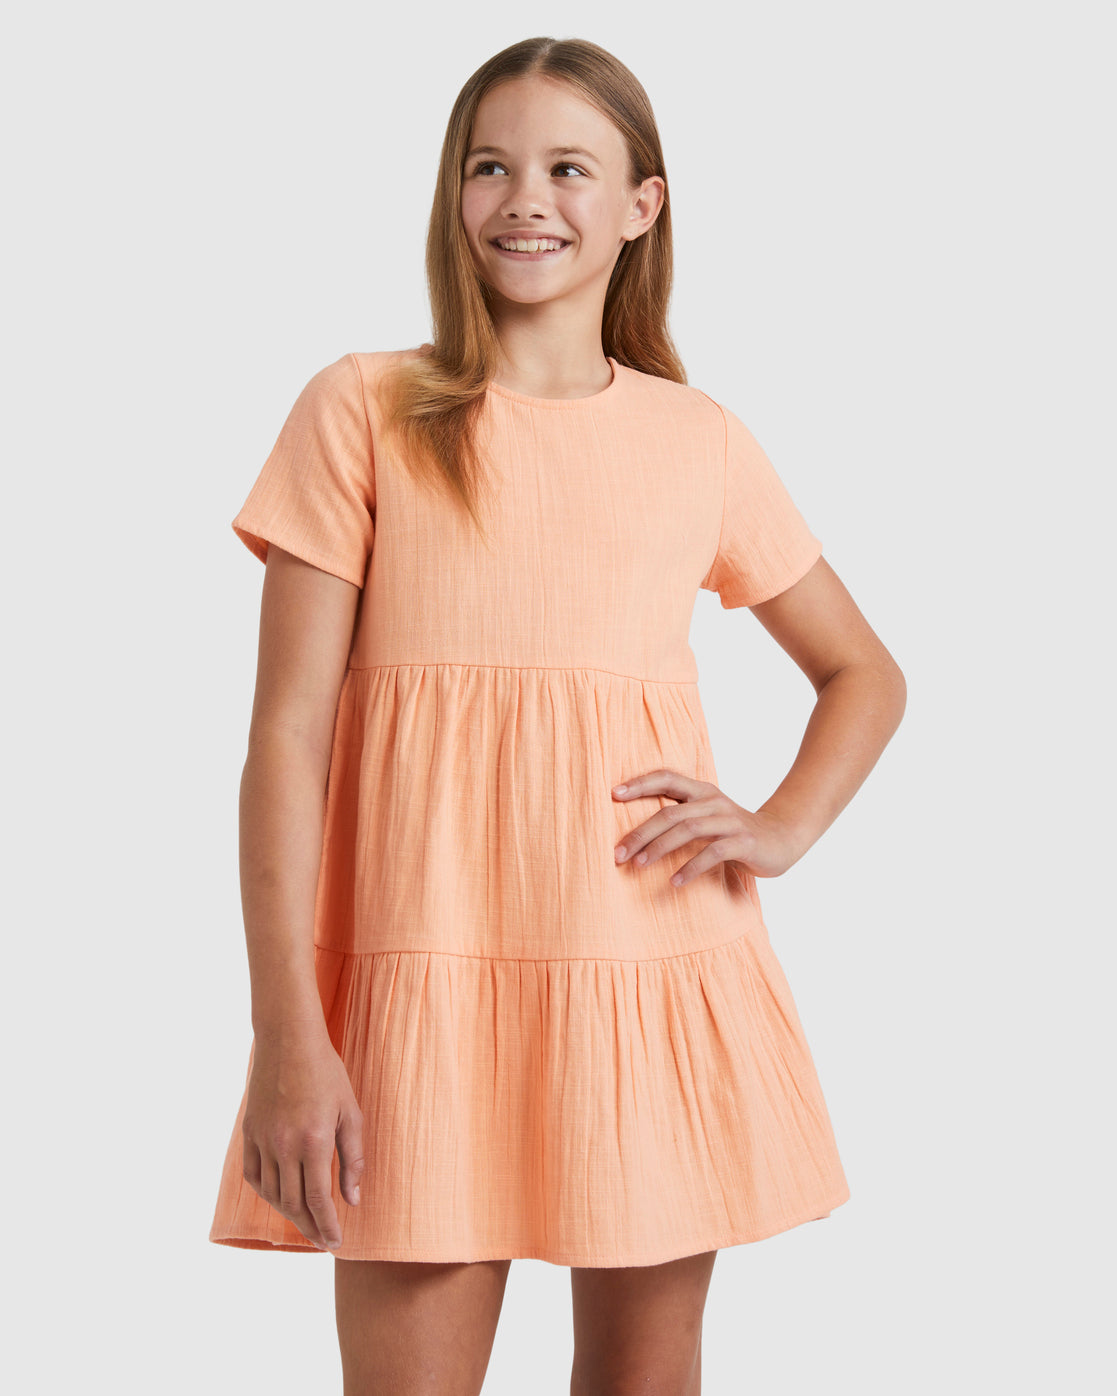 Billabong Girls Gigi Dress in peach colour on model